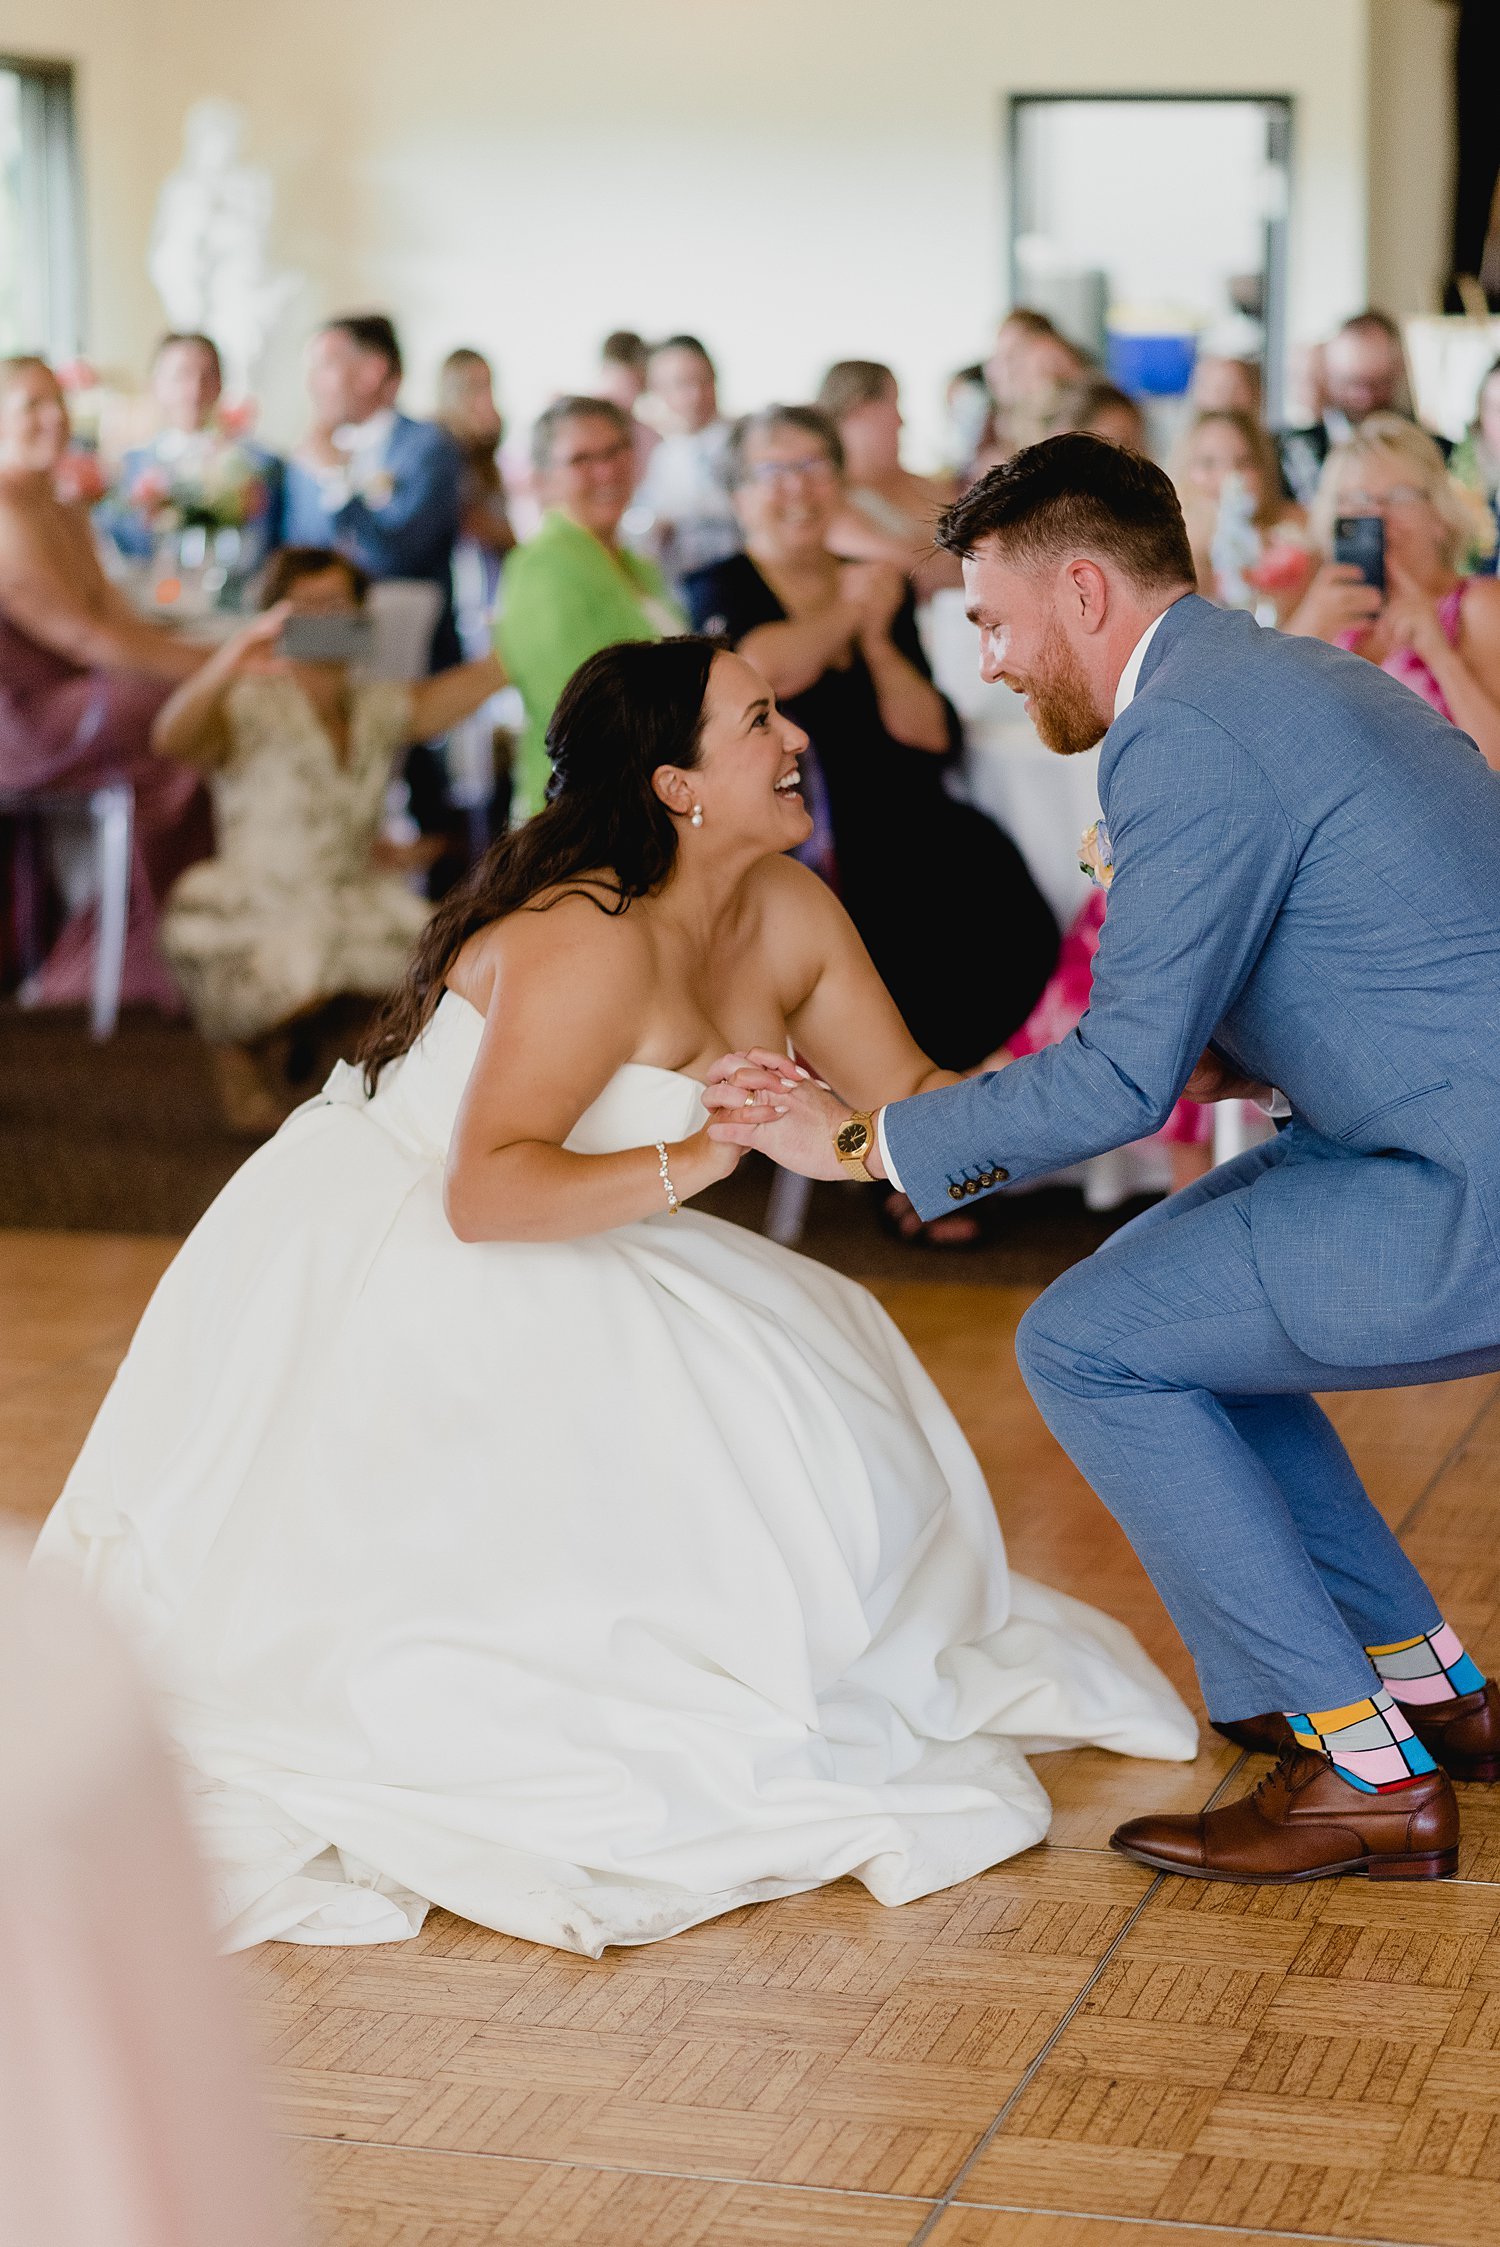 Casa Dea Winery Wedding in Prince Edward County | Prince Edward County Wedding Photographer | Holly McMurter Photographs_0150.jpg